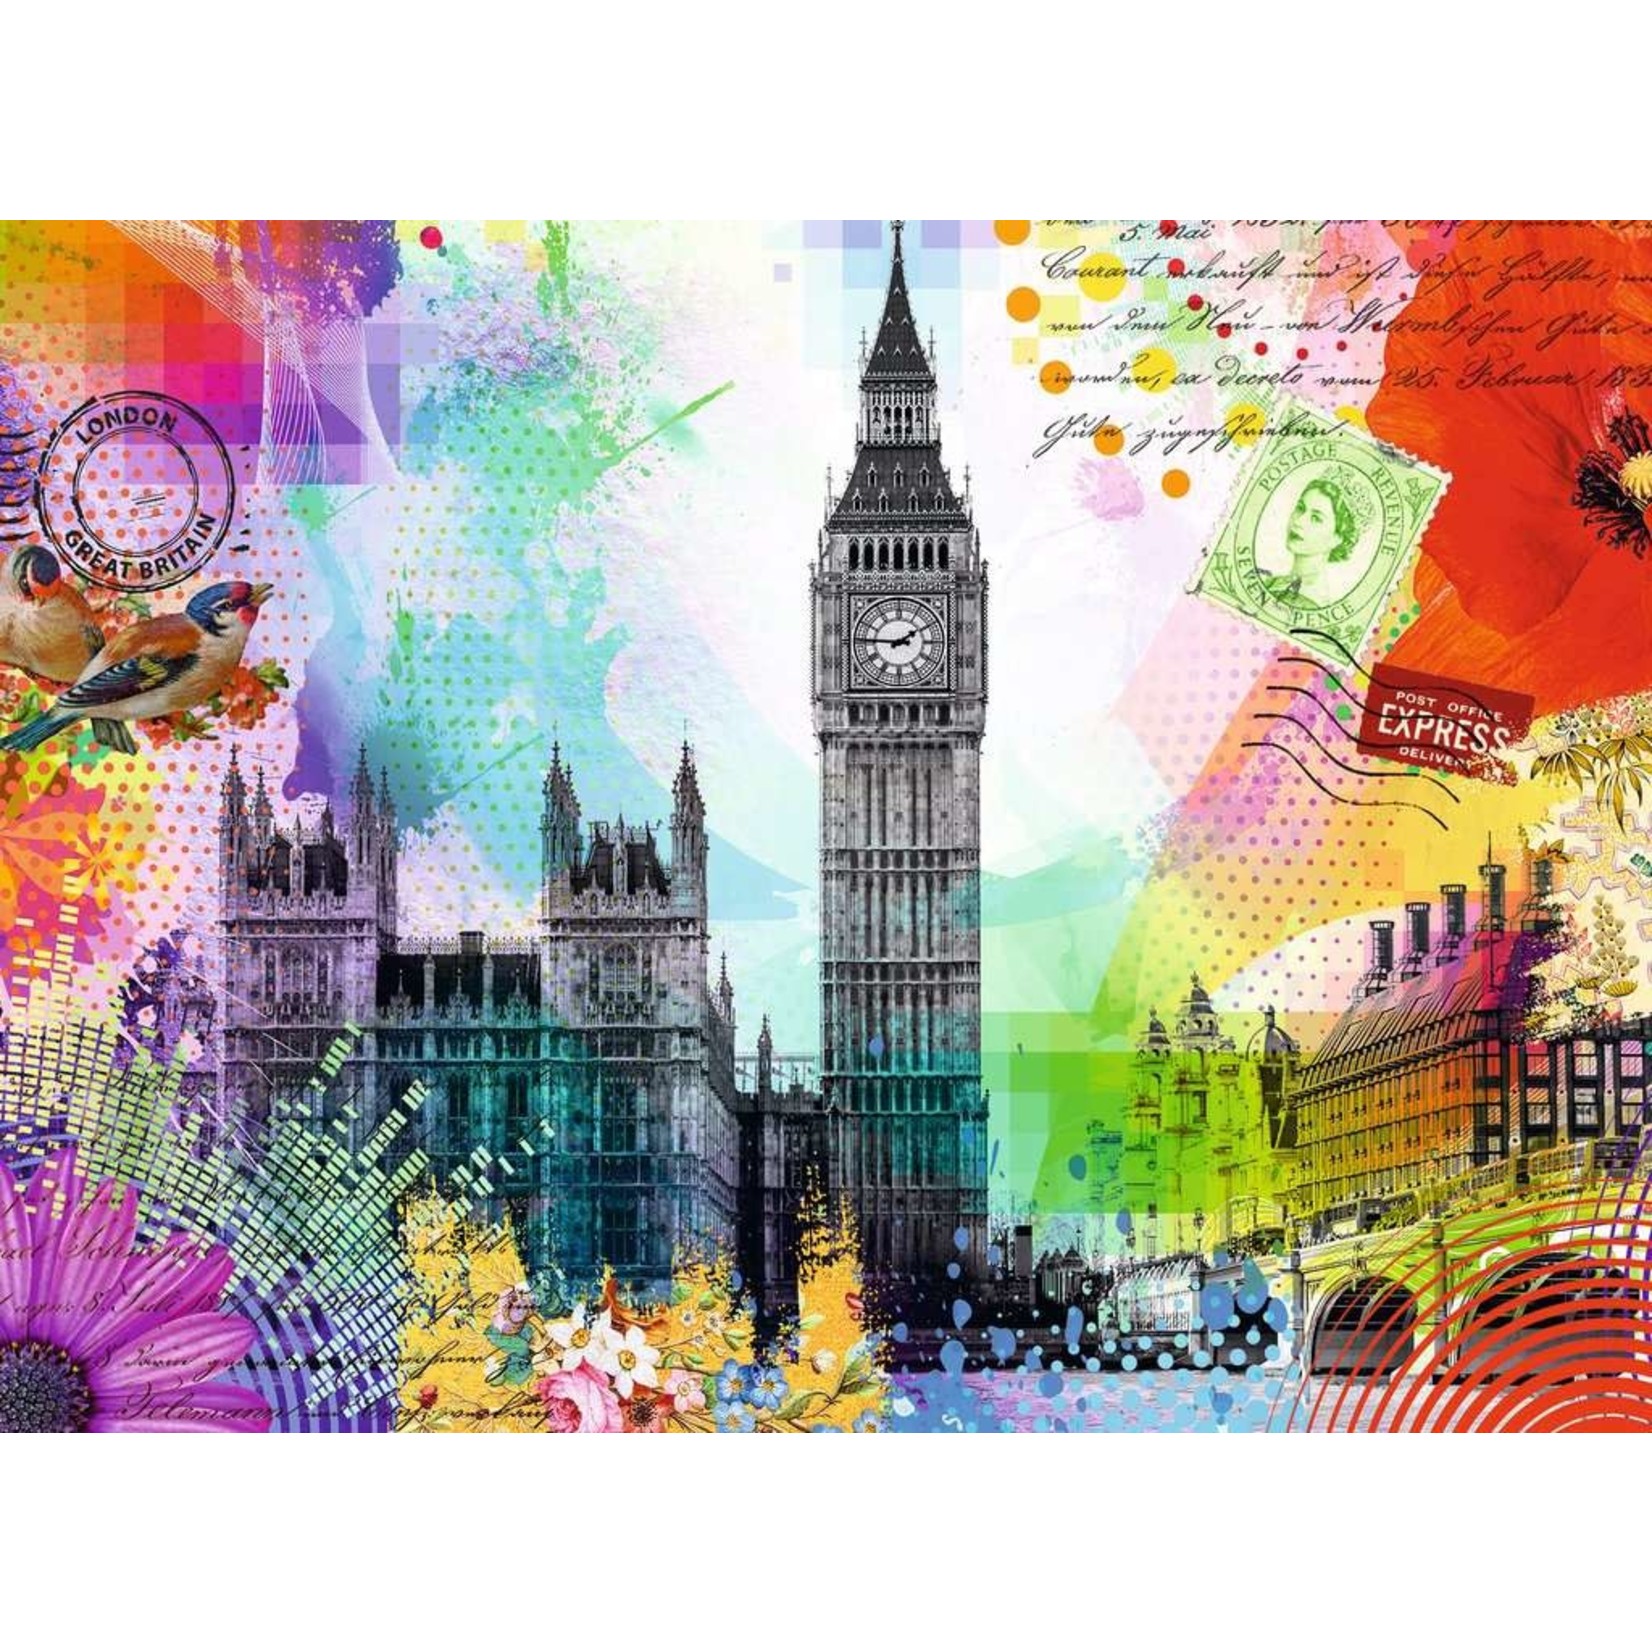 Ravensburger London Postcard, 500-Piece Jigsaw Puzzle